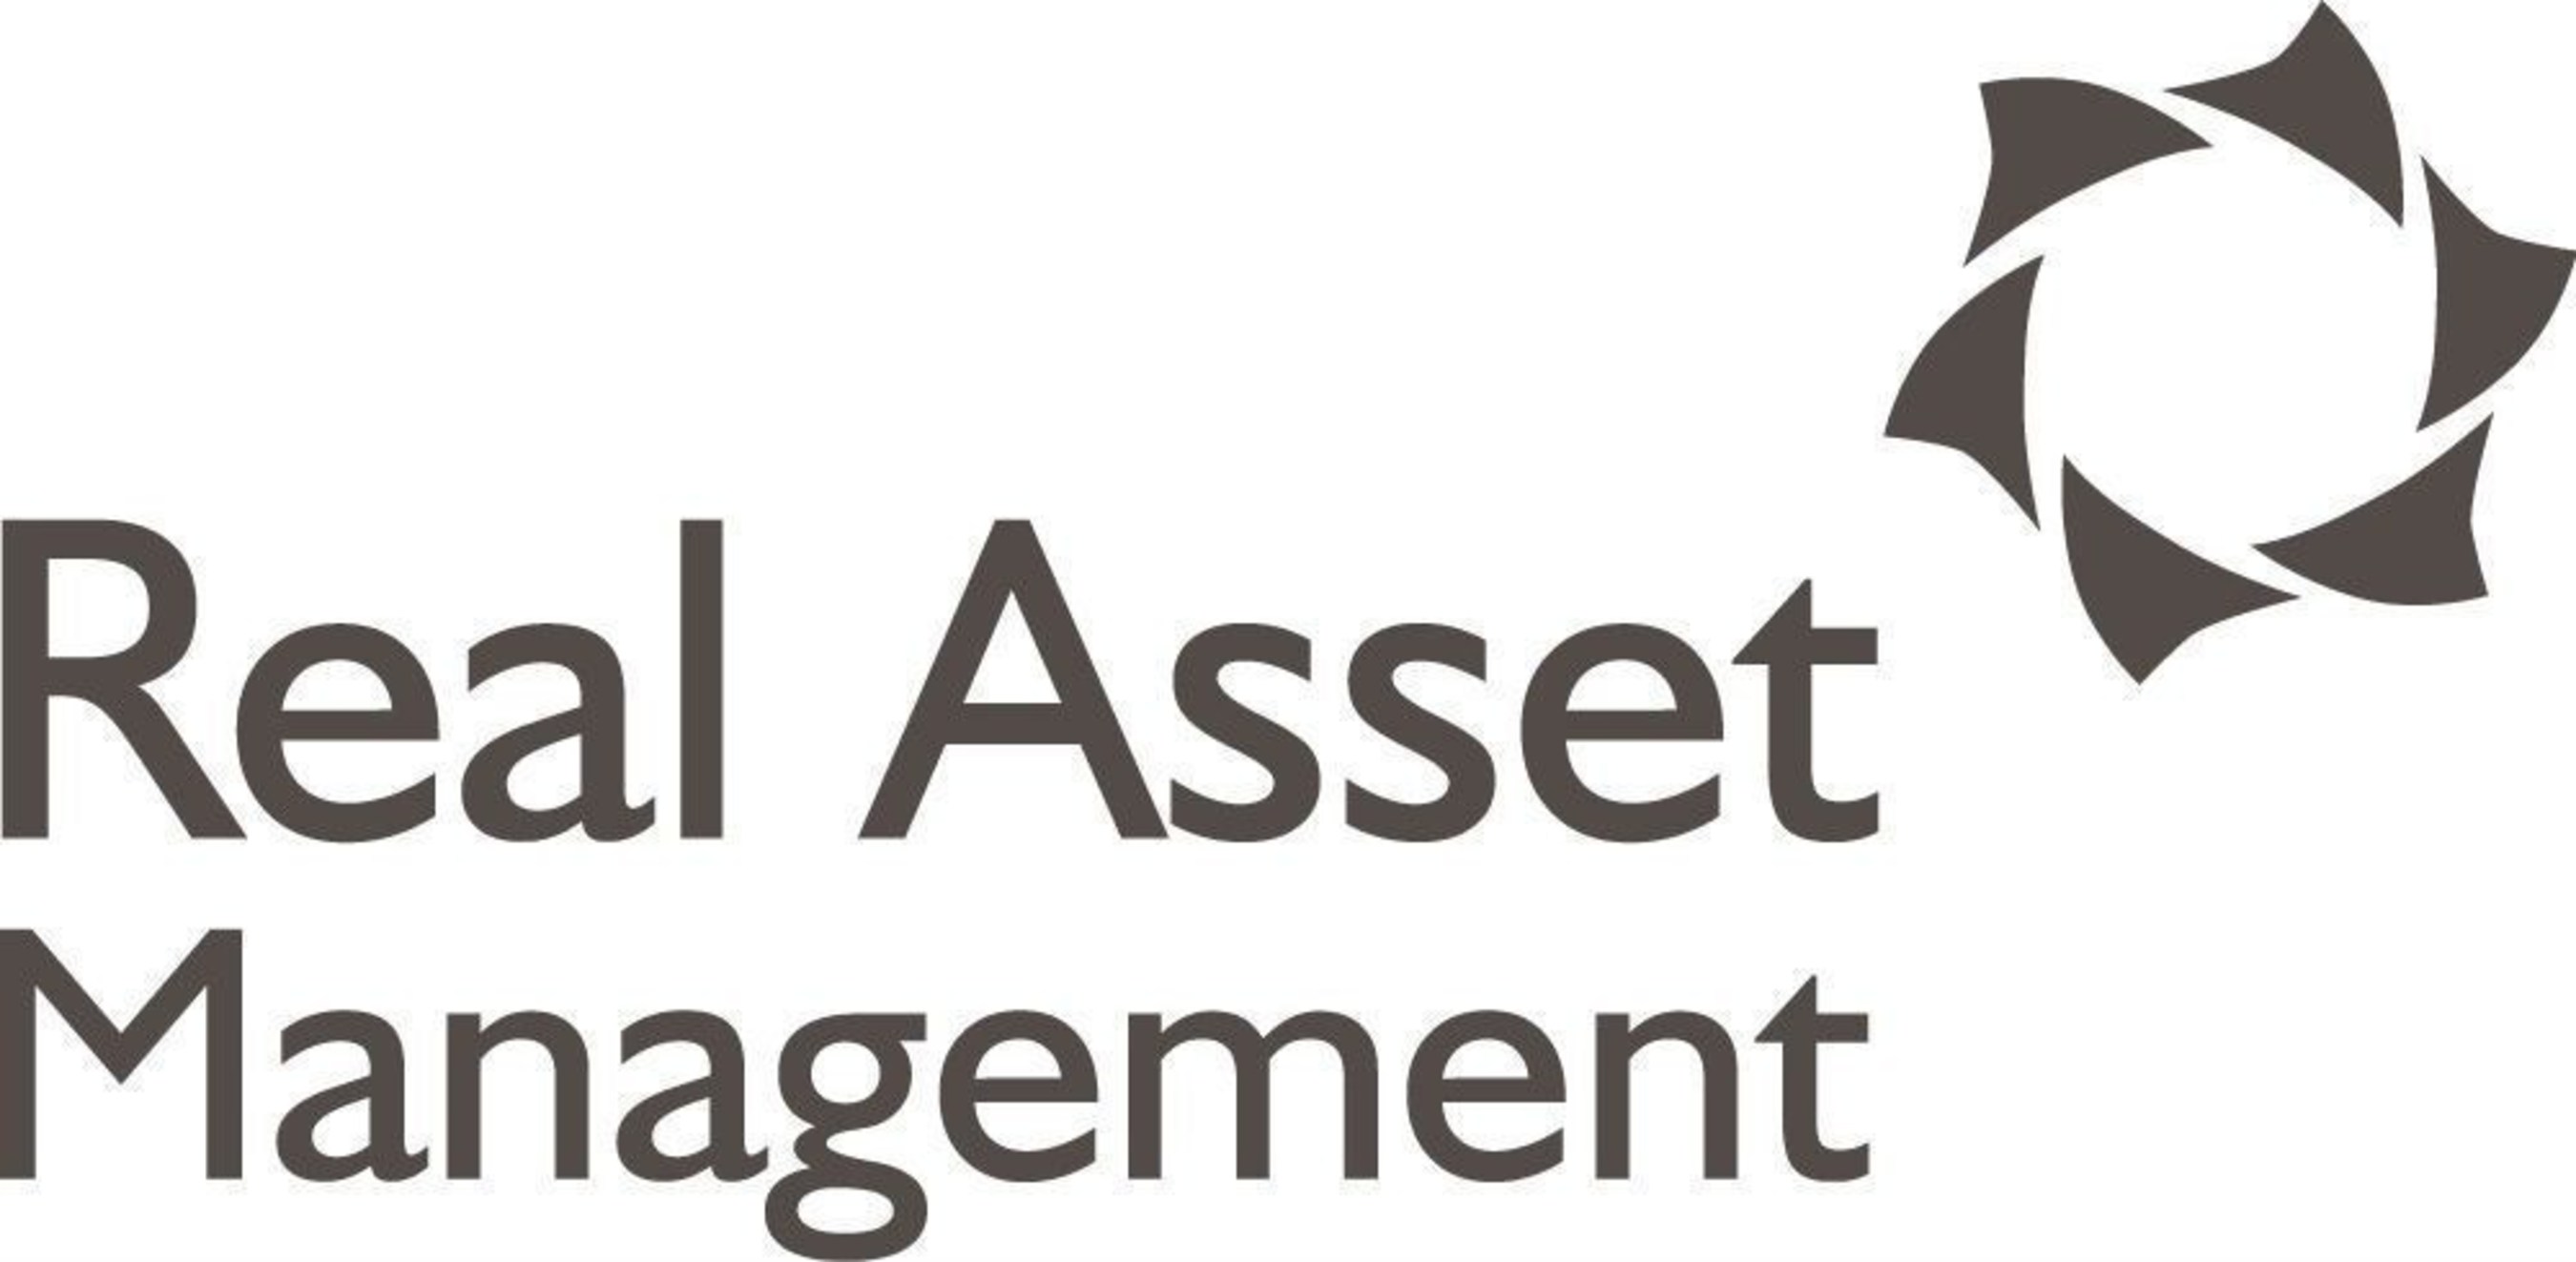 Real Asset Management Logo (PRNewsFoto/Real Asset Management) (PRNewsFoto/Real Asset Management)